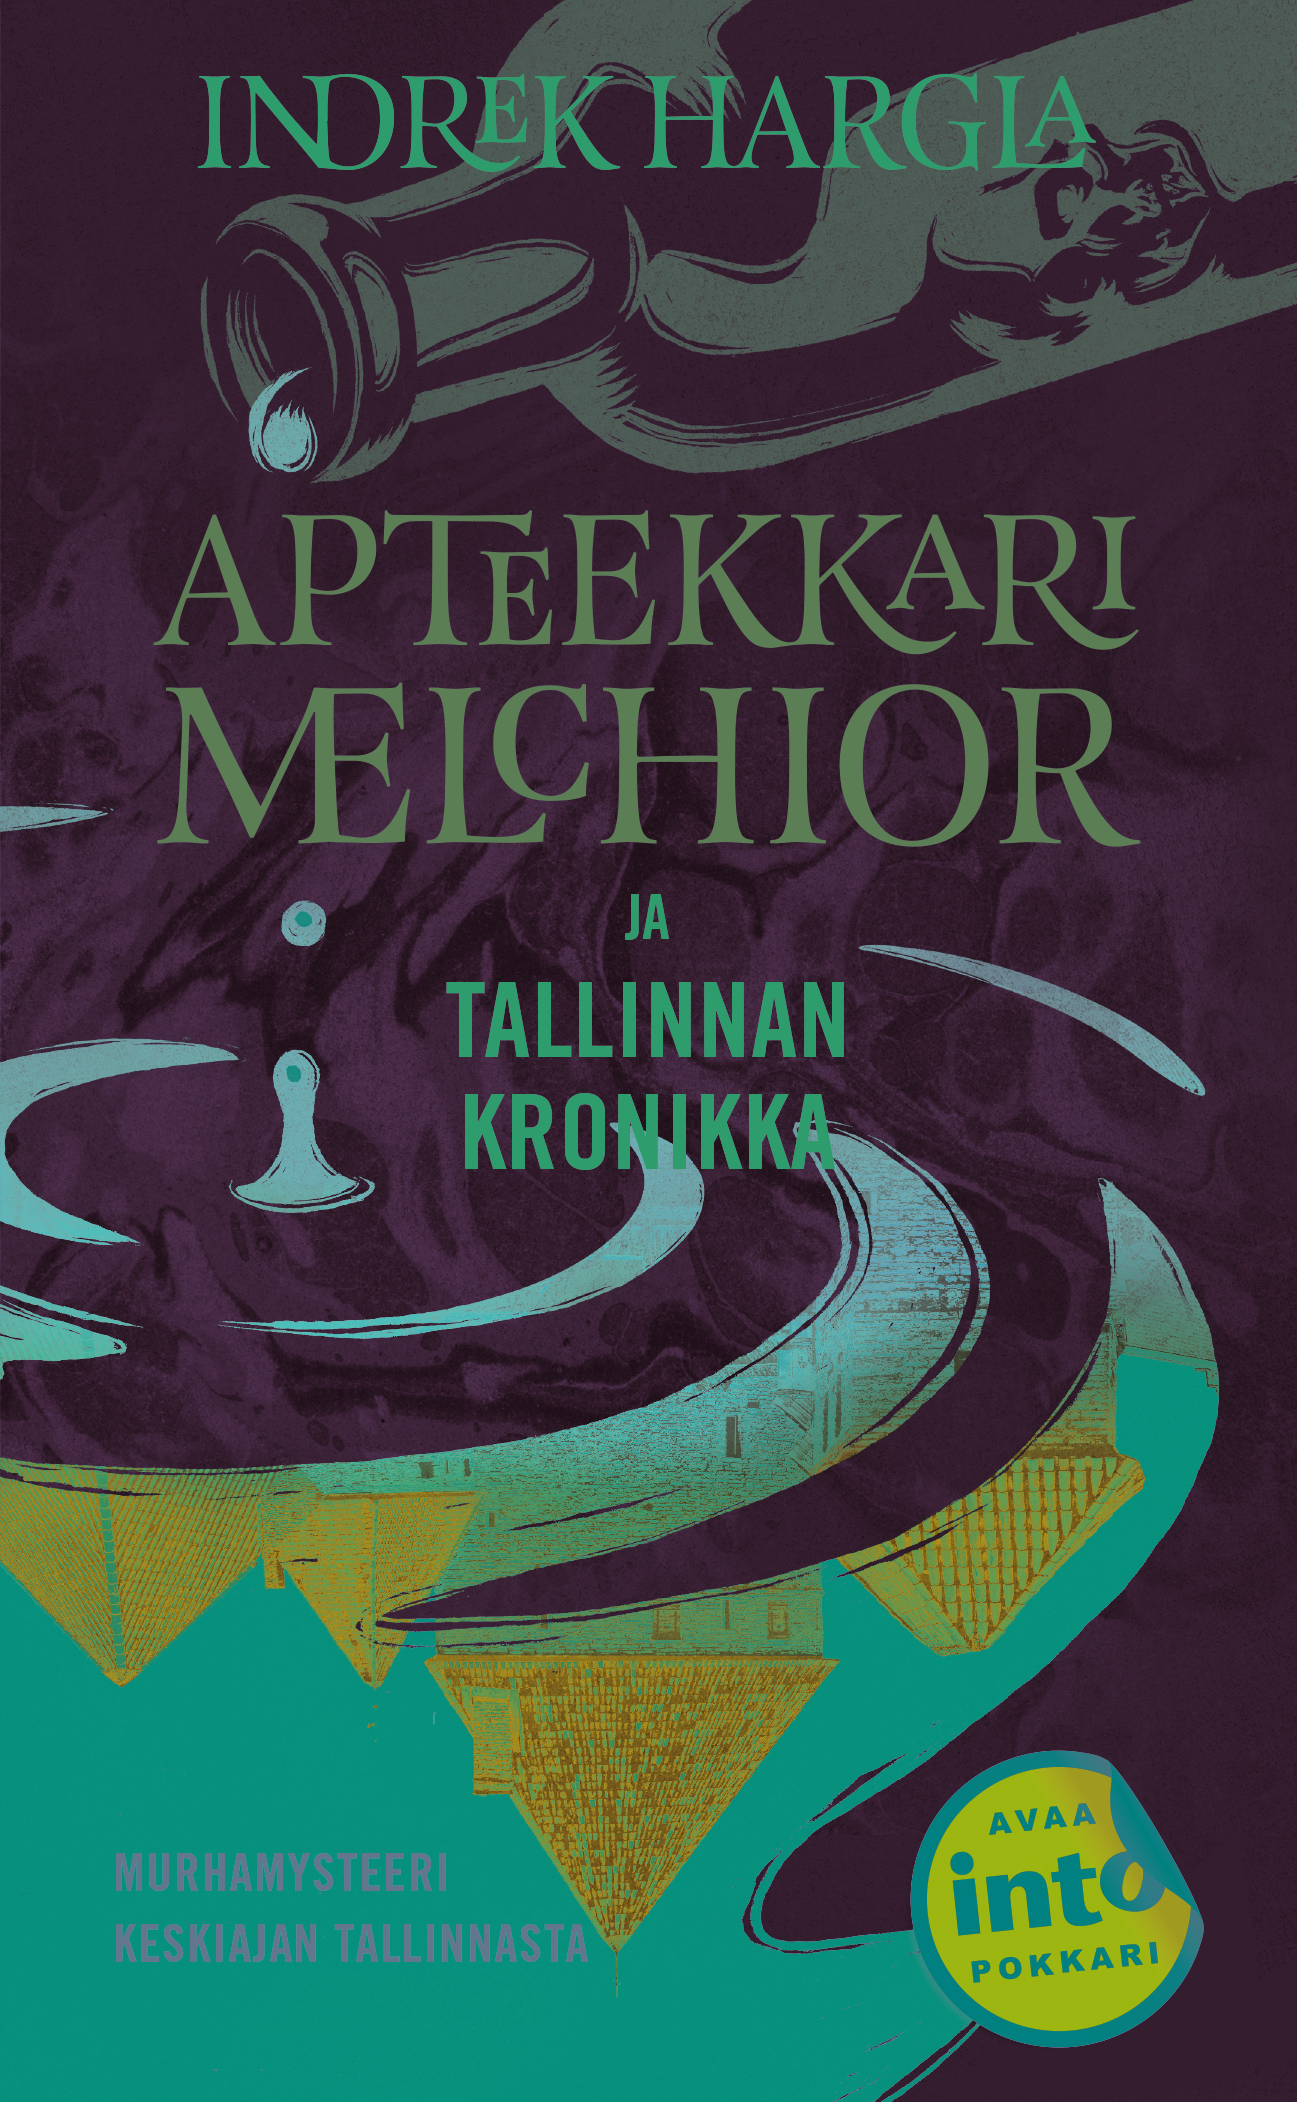 Hargla, Indrek - Apteekkari Melchior ja Tallinnan kronikka, ebook